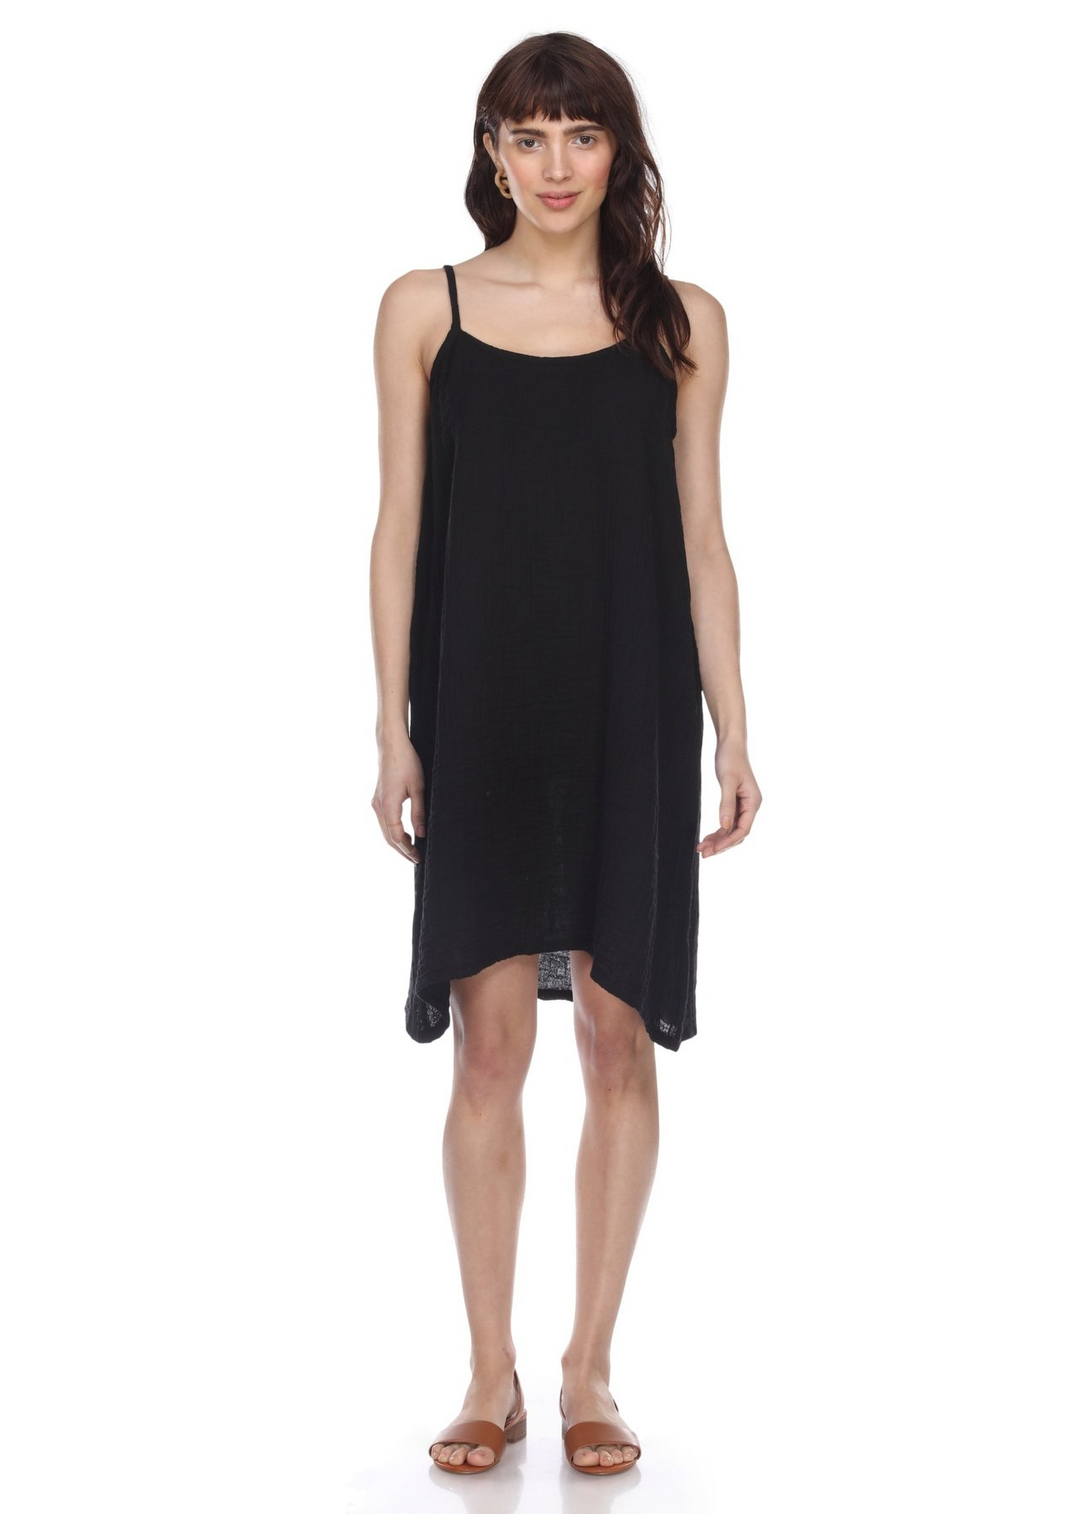 BLACK COTTON SLIP DRESS - Kingfisher Road - Online Boutique